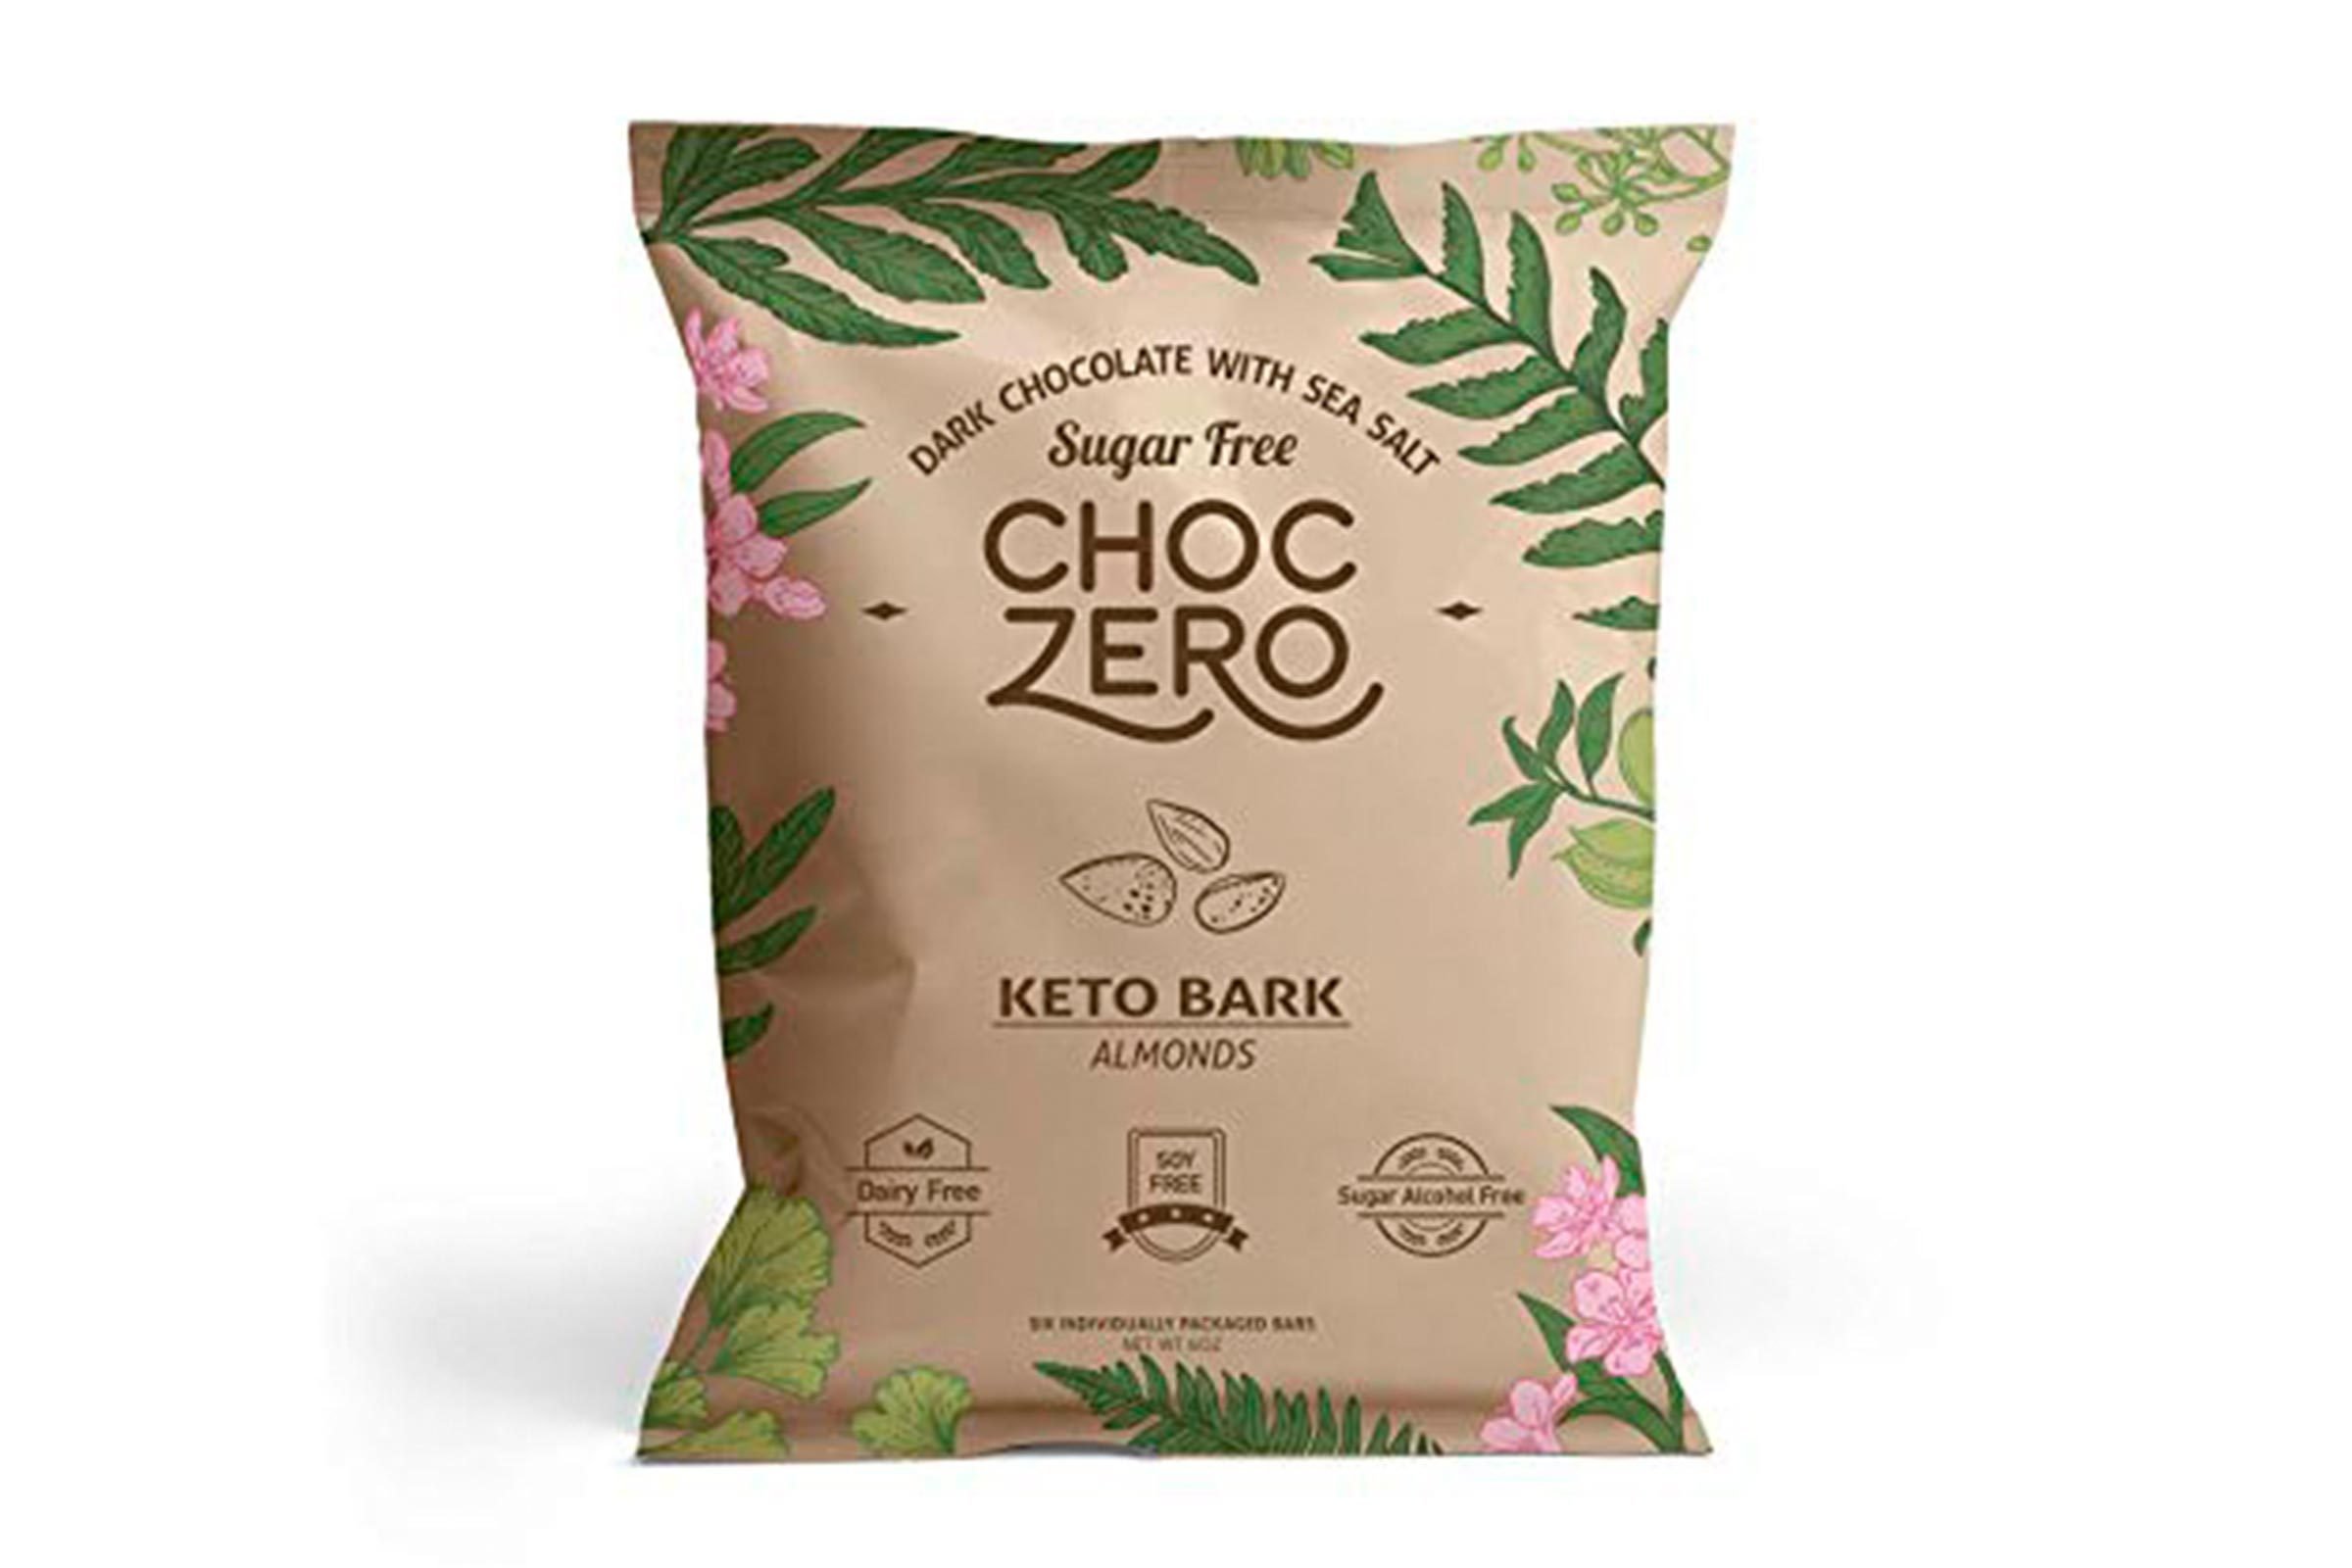 13 Best Keto-Friendly Snacks You Can Buy on Amazon